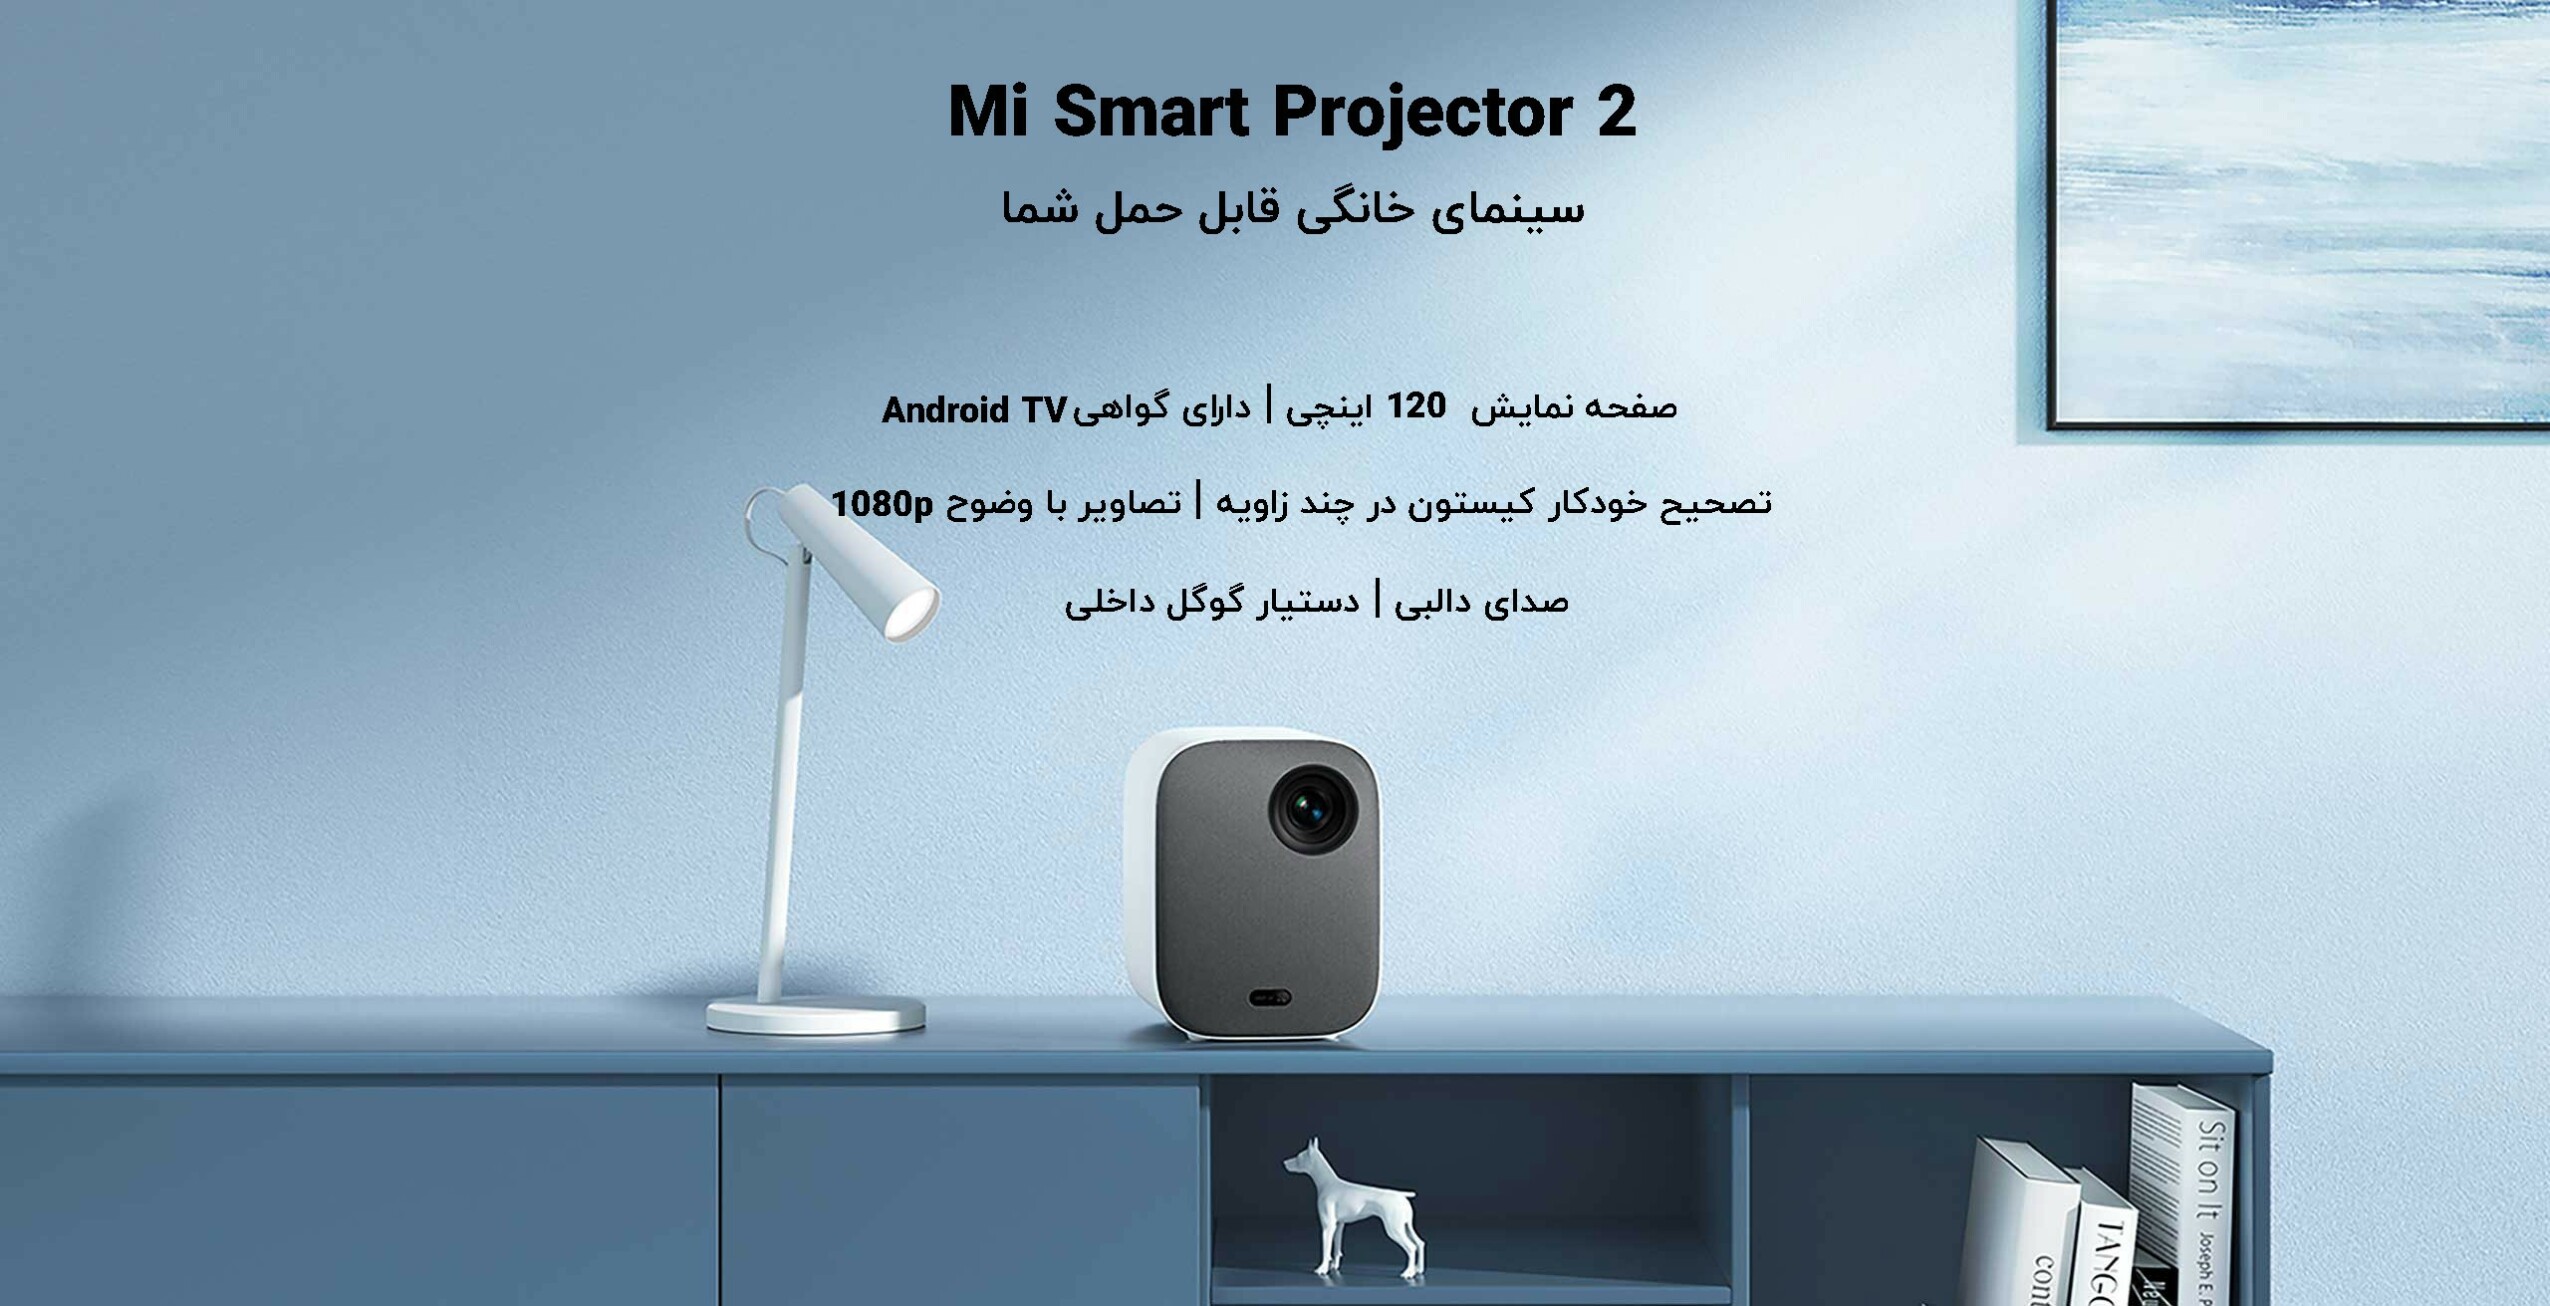 Mi Smart Projector 2